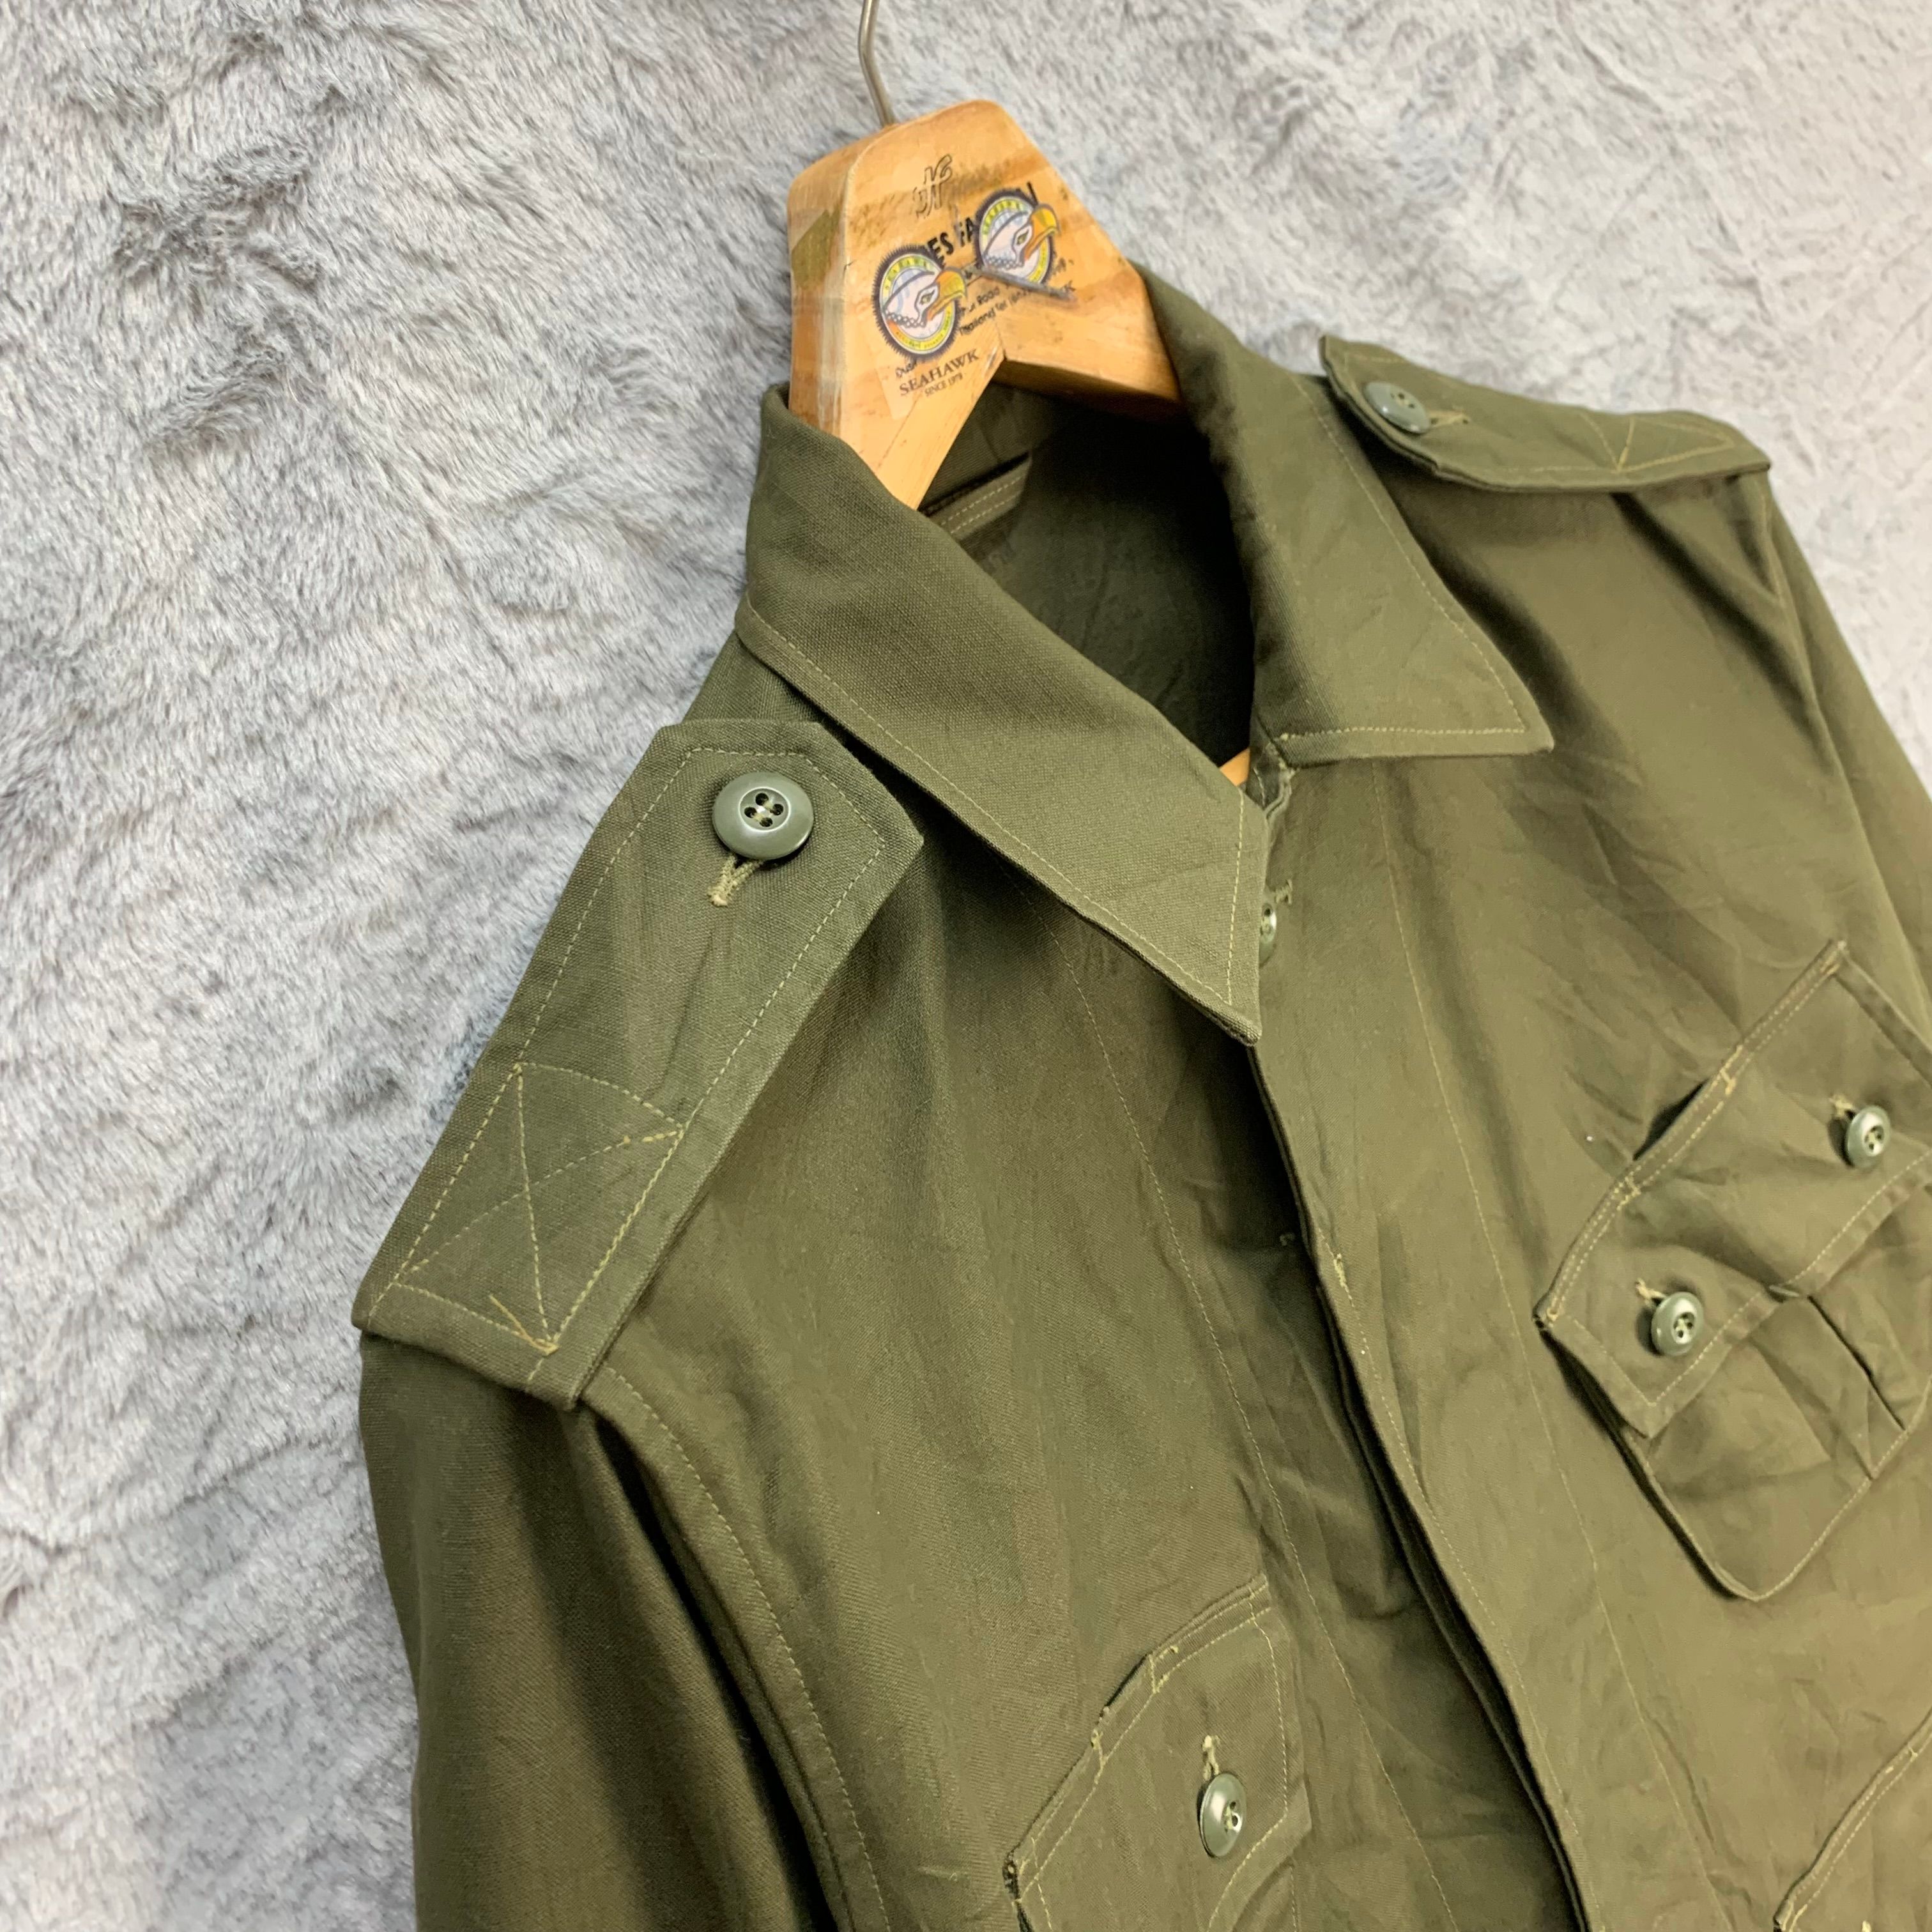 Vintage - Army Uniform Military Field Jacket / Chore Jacket #4400-152 - 4